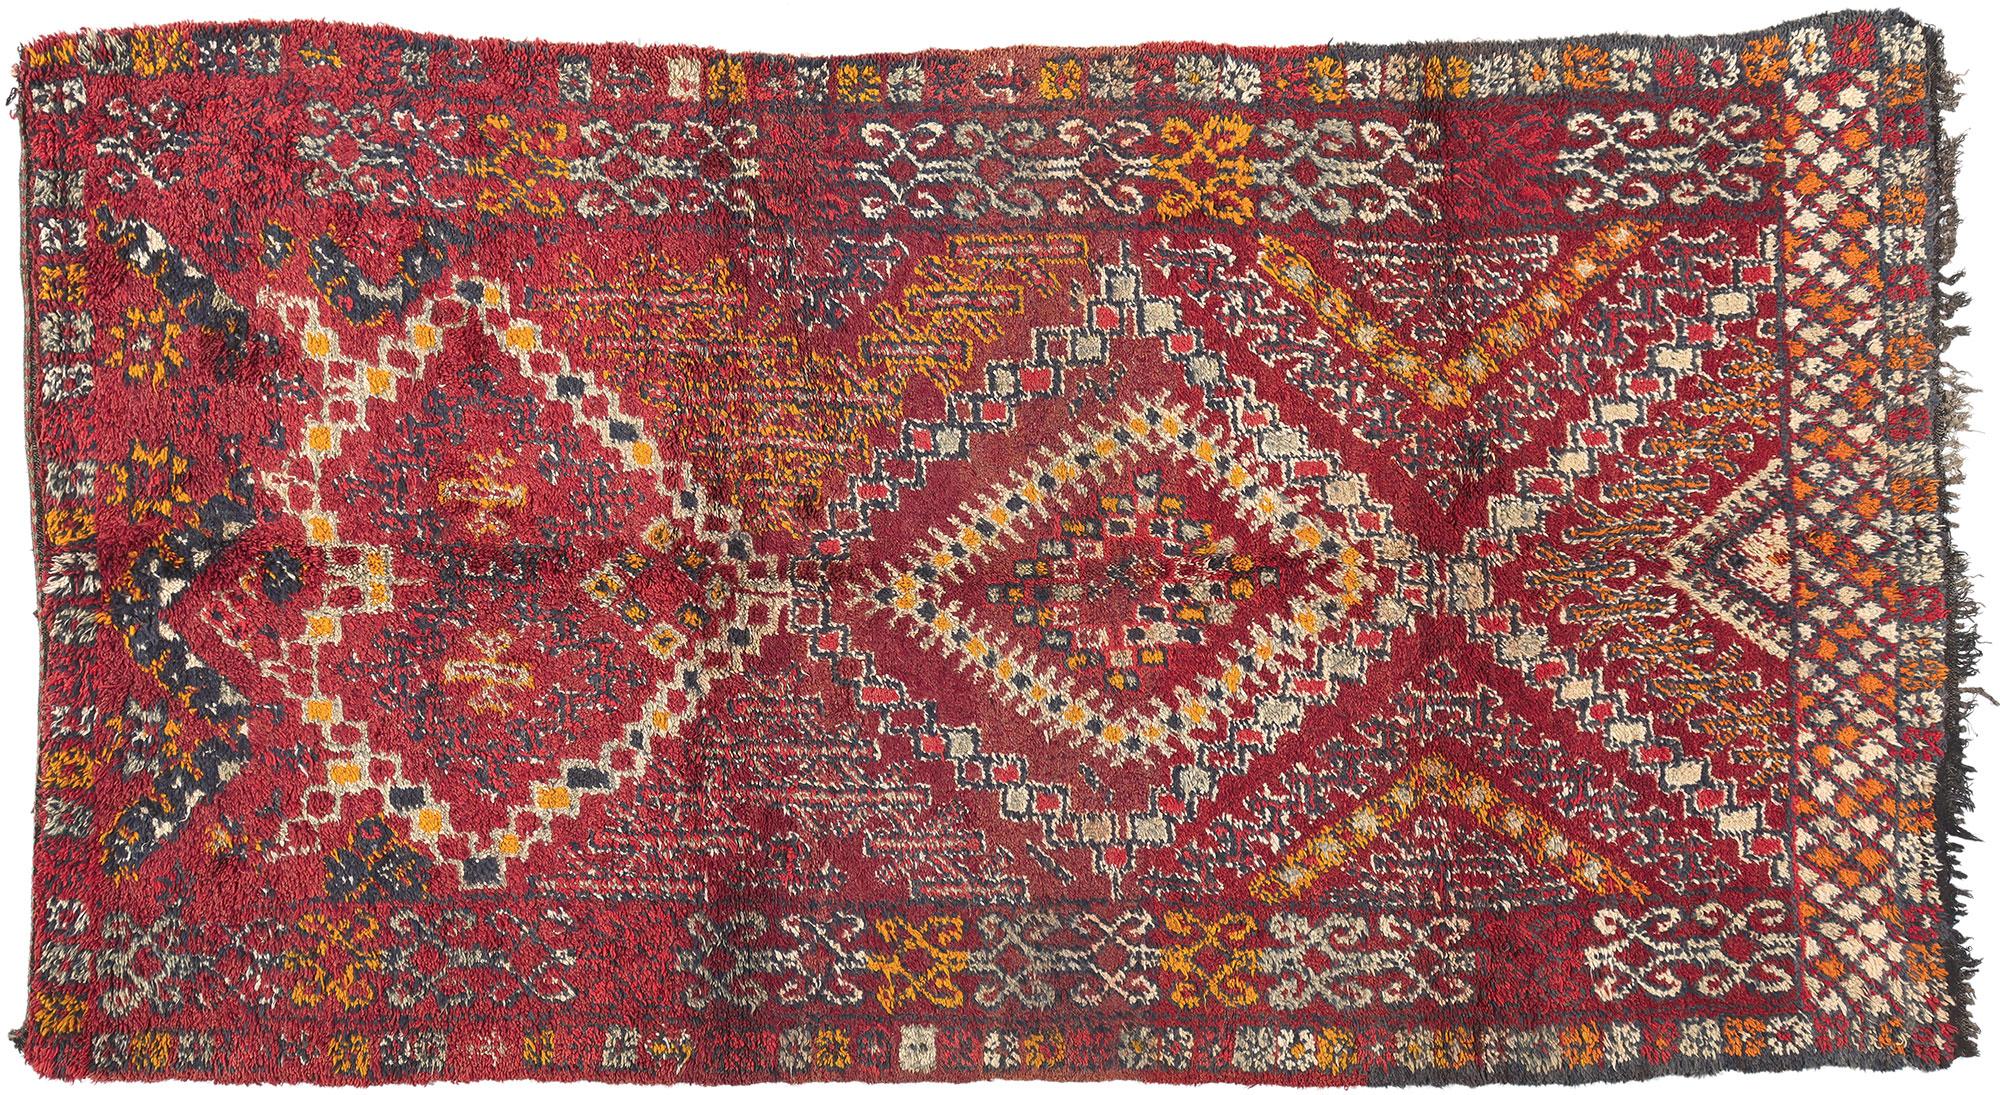 Vintage Beni MGuild Moroccan Rug, Tribal Enchantment Meets Midcentury Modern For Sale 3